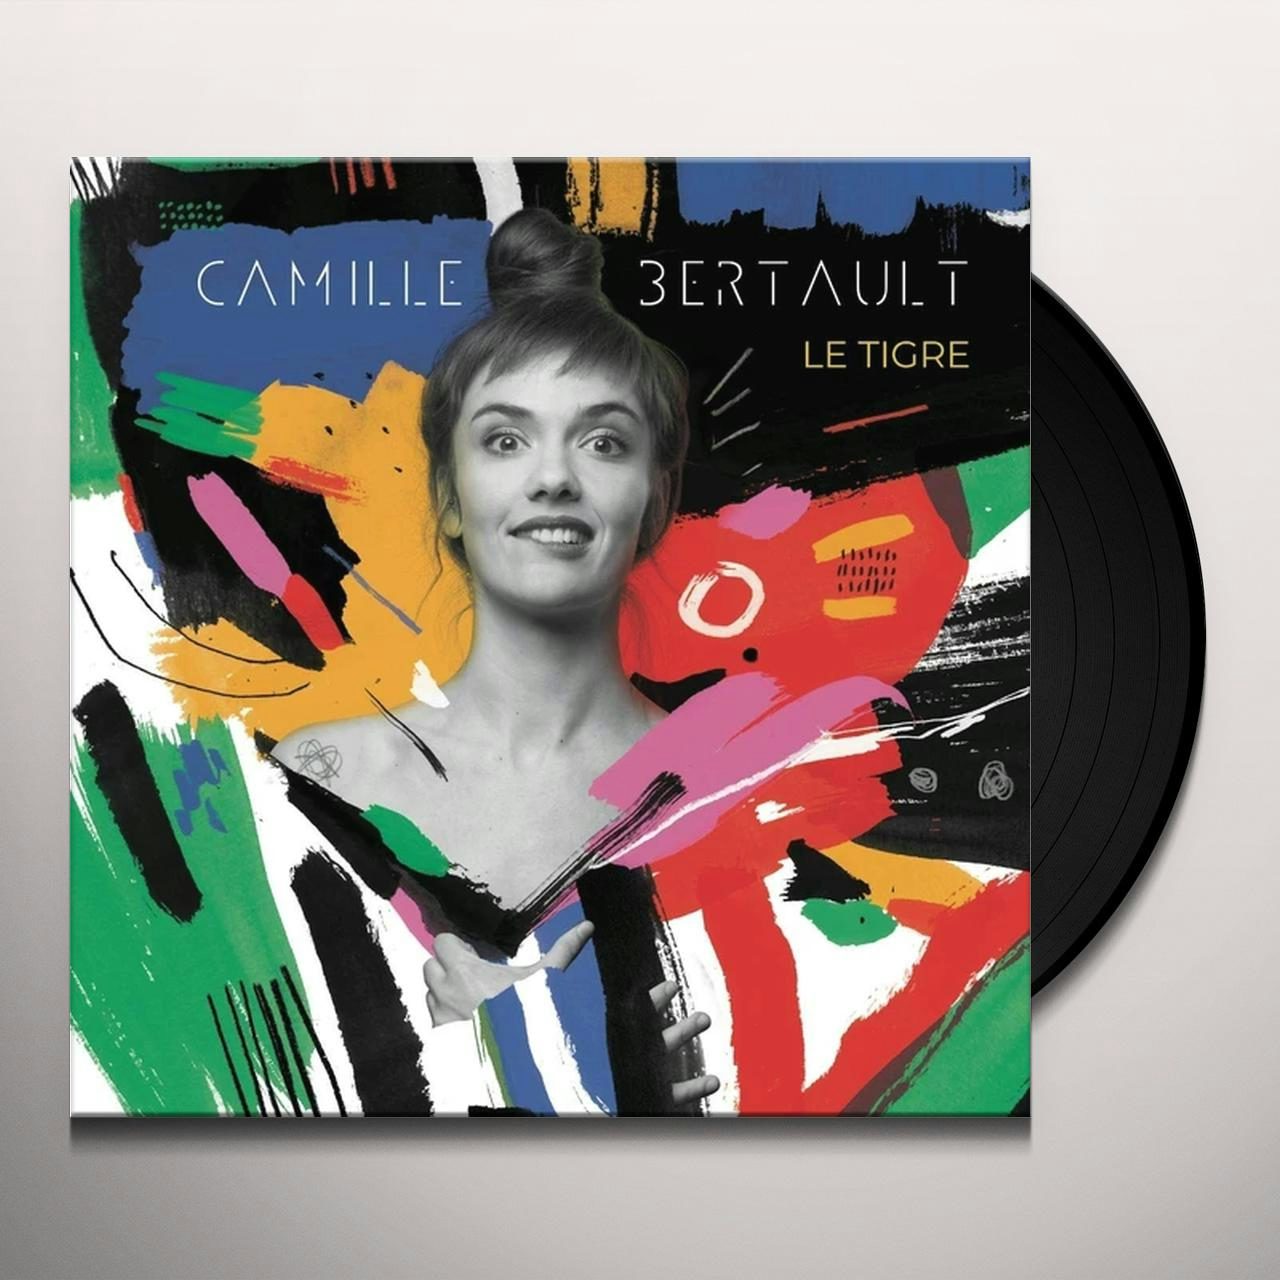 Camille Bertault Le tigre Vinyl Record